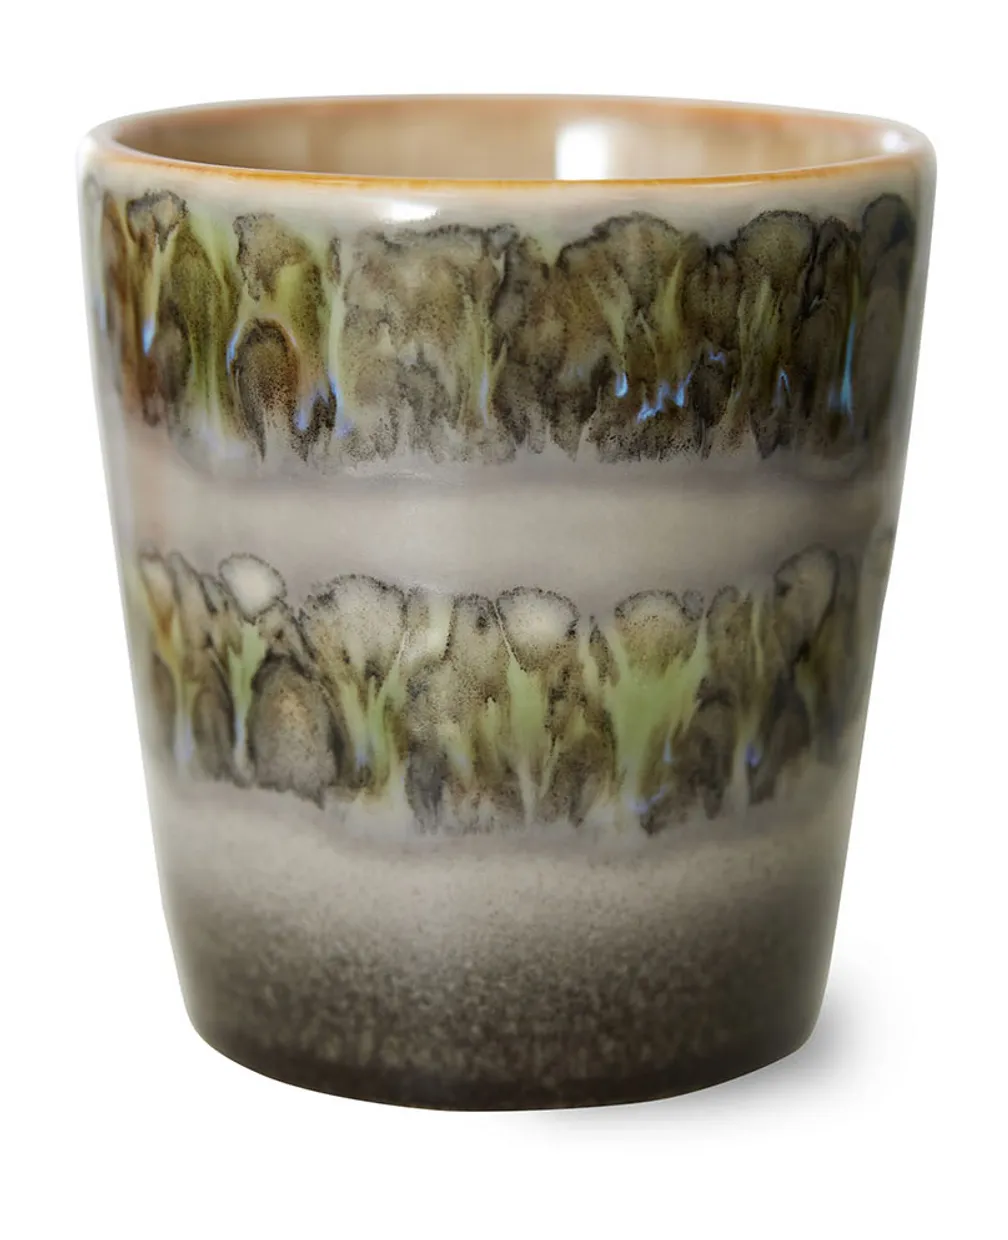 70s ceramics: coffee mug, fern